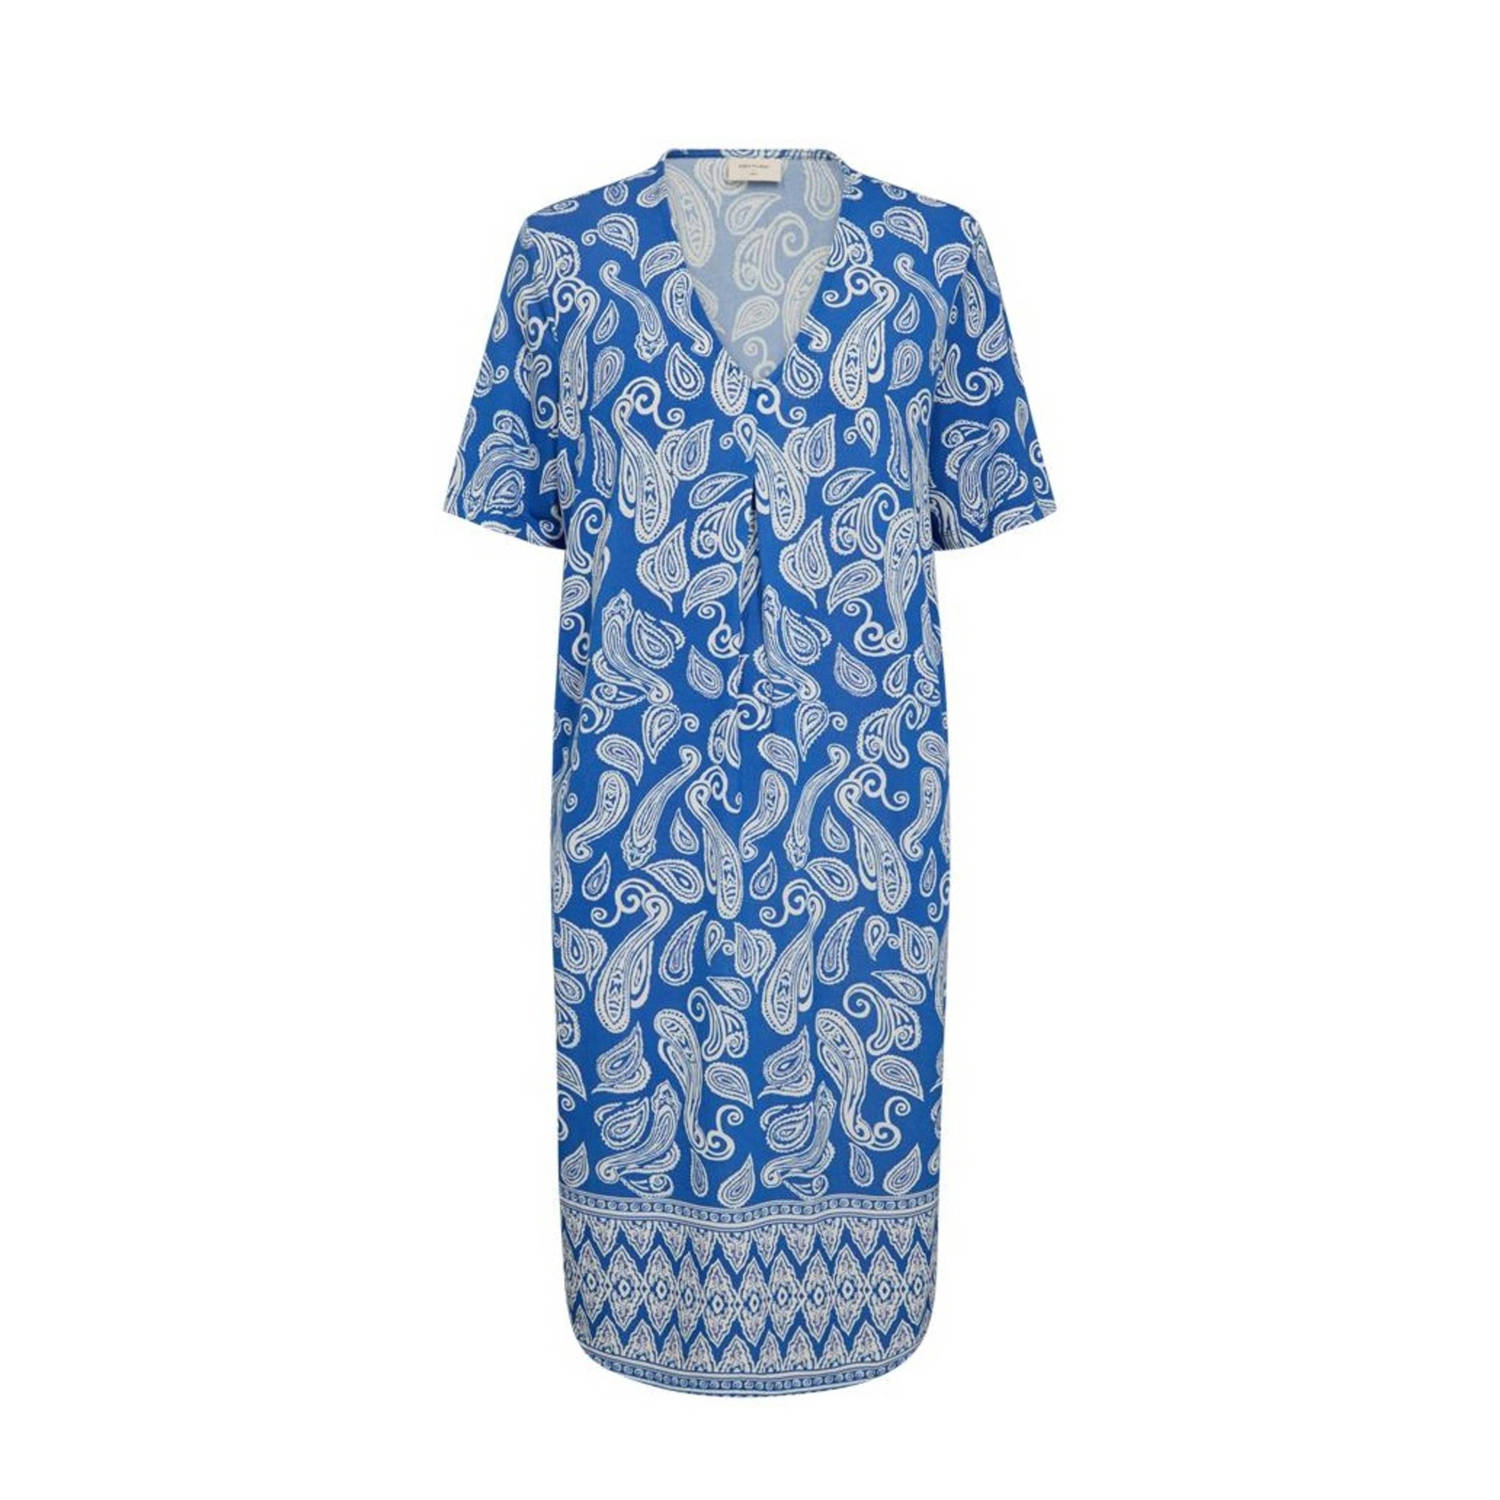 FREEQUENT jurk met paisleyprint blauw ecru